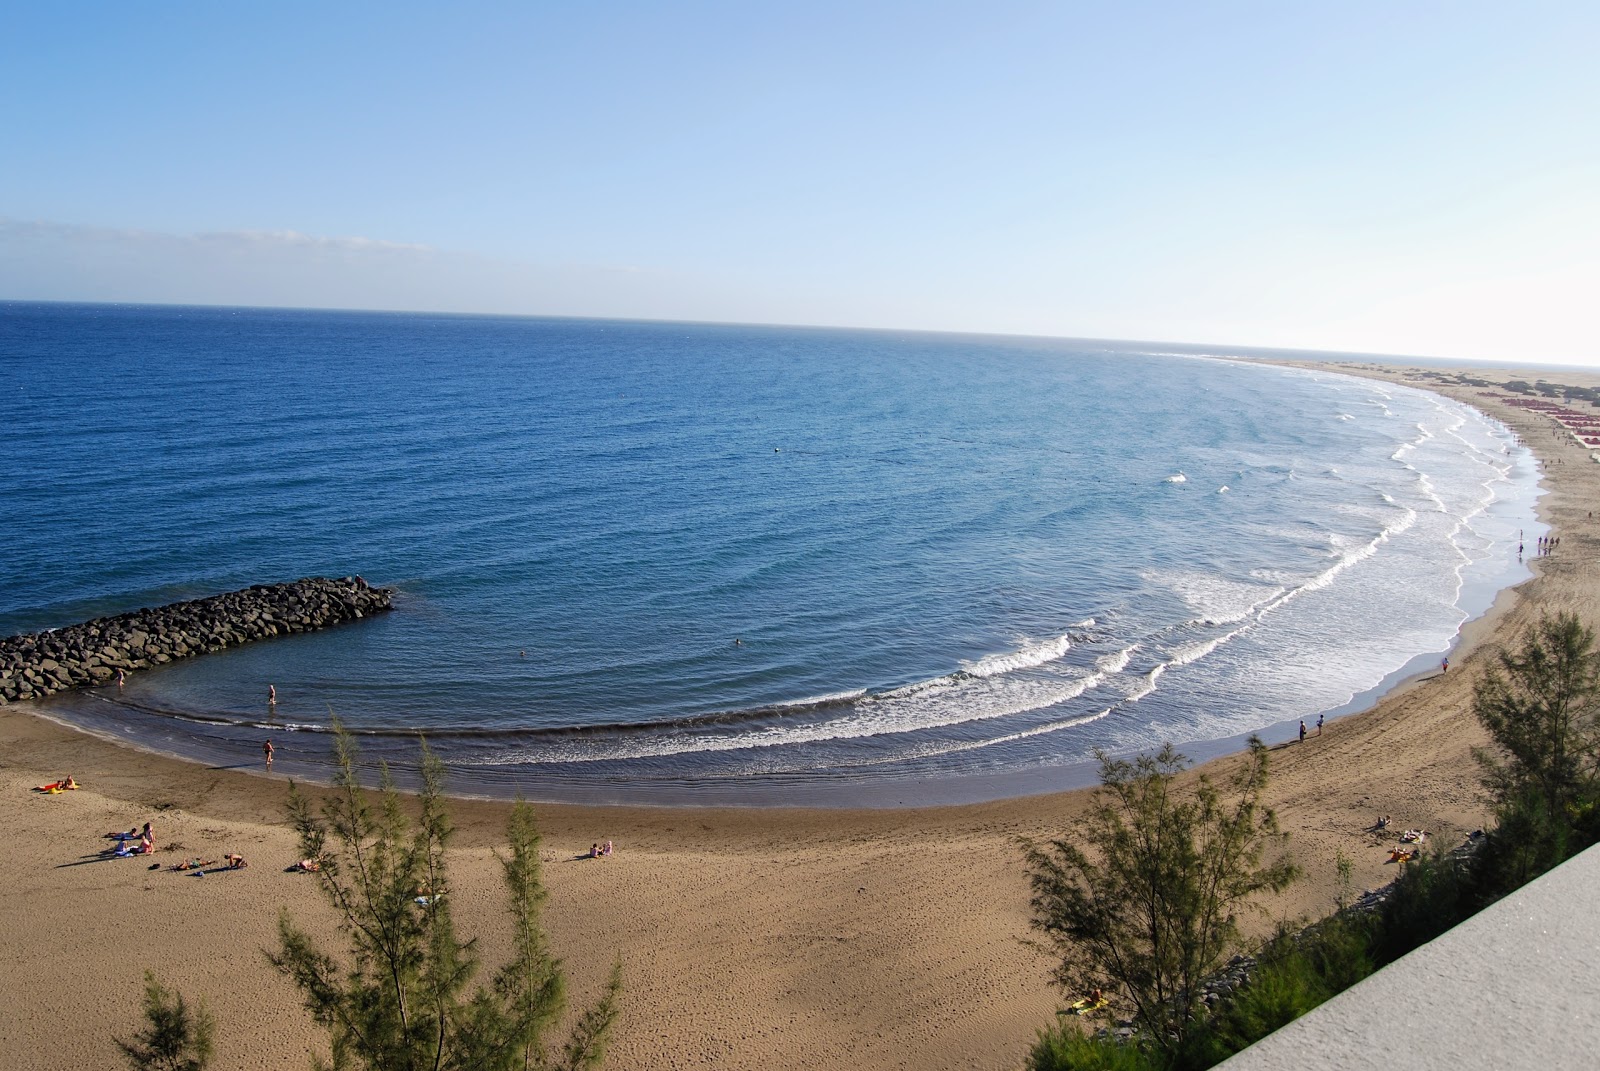 Foto di Playa El Veril con una superficie del sabbia fine e luminosa